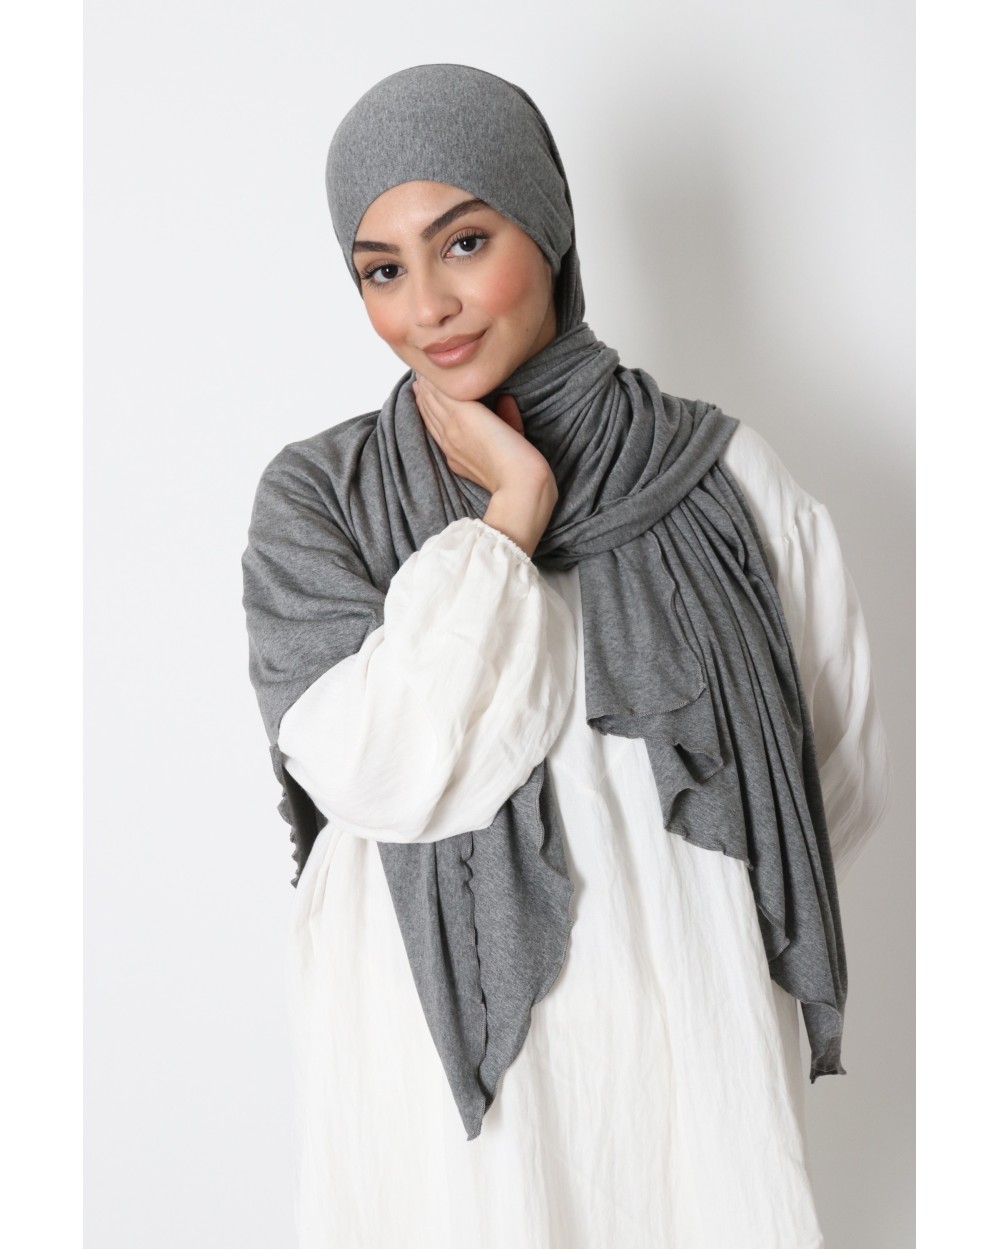 Jersey hijab to tie